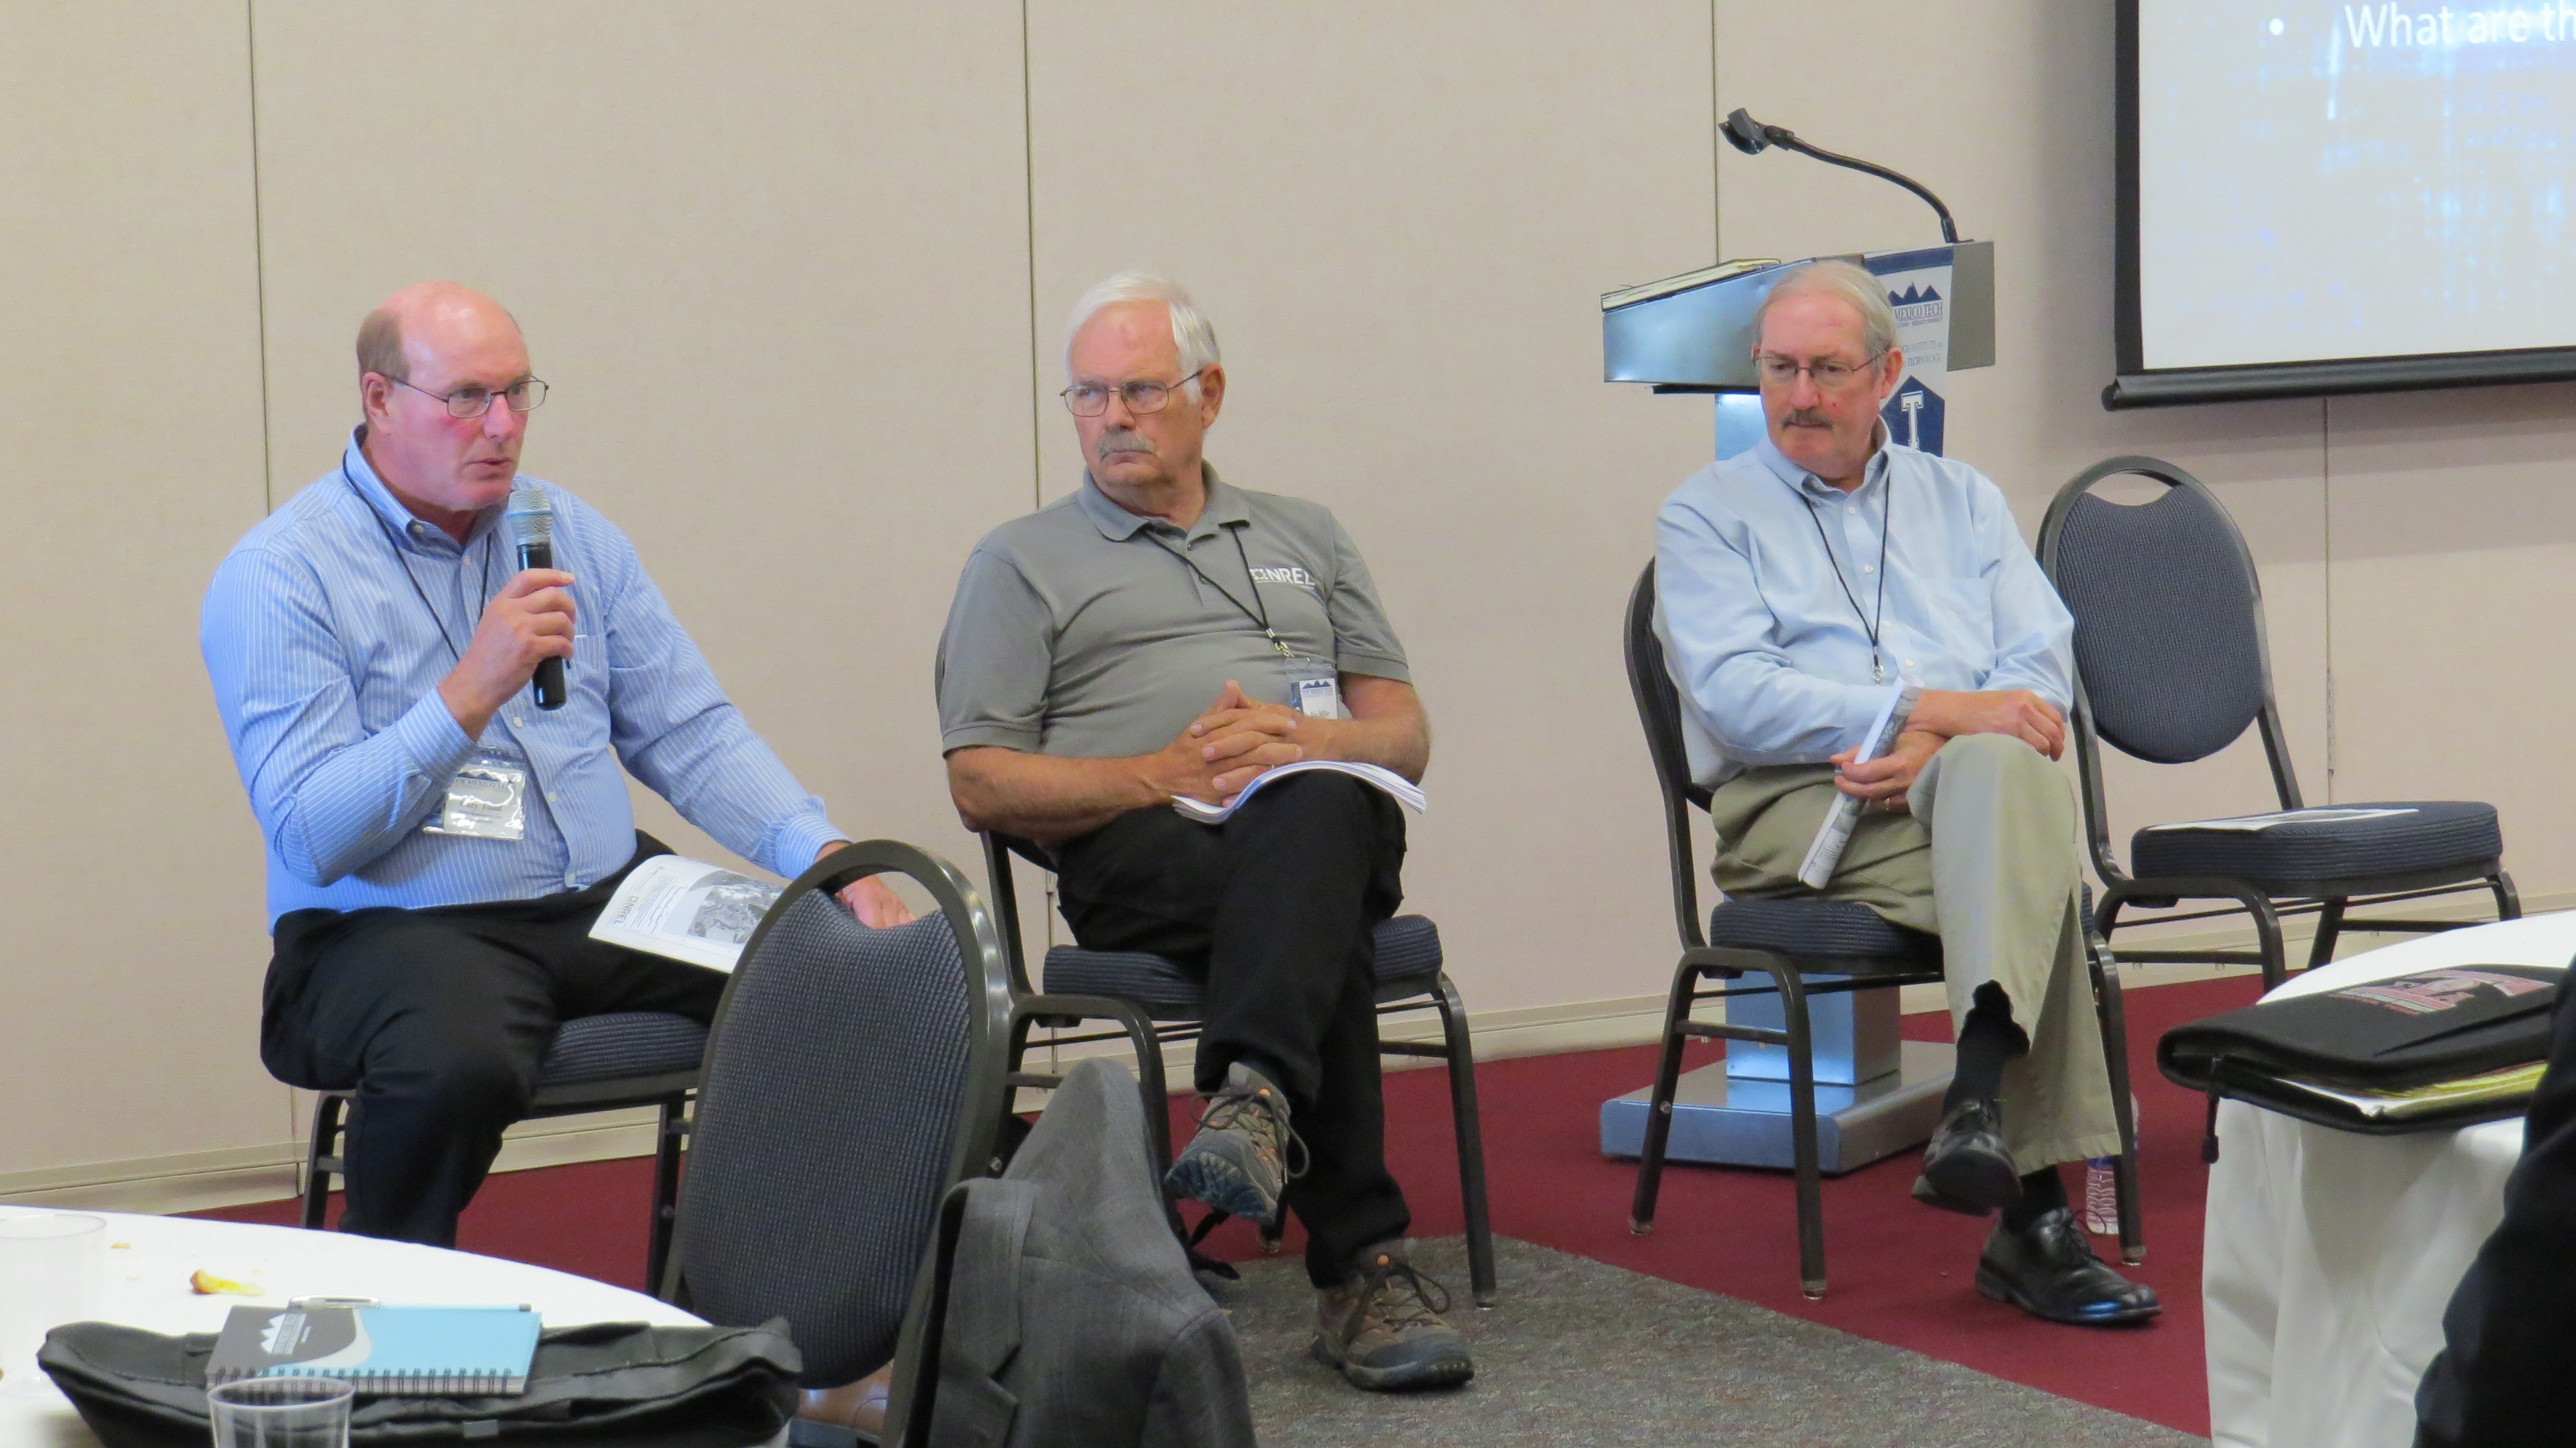 Gary Todd, Jim Miller, Thomas Bowles; Smart/Green Grid/Cities Panelists